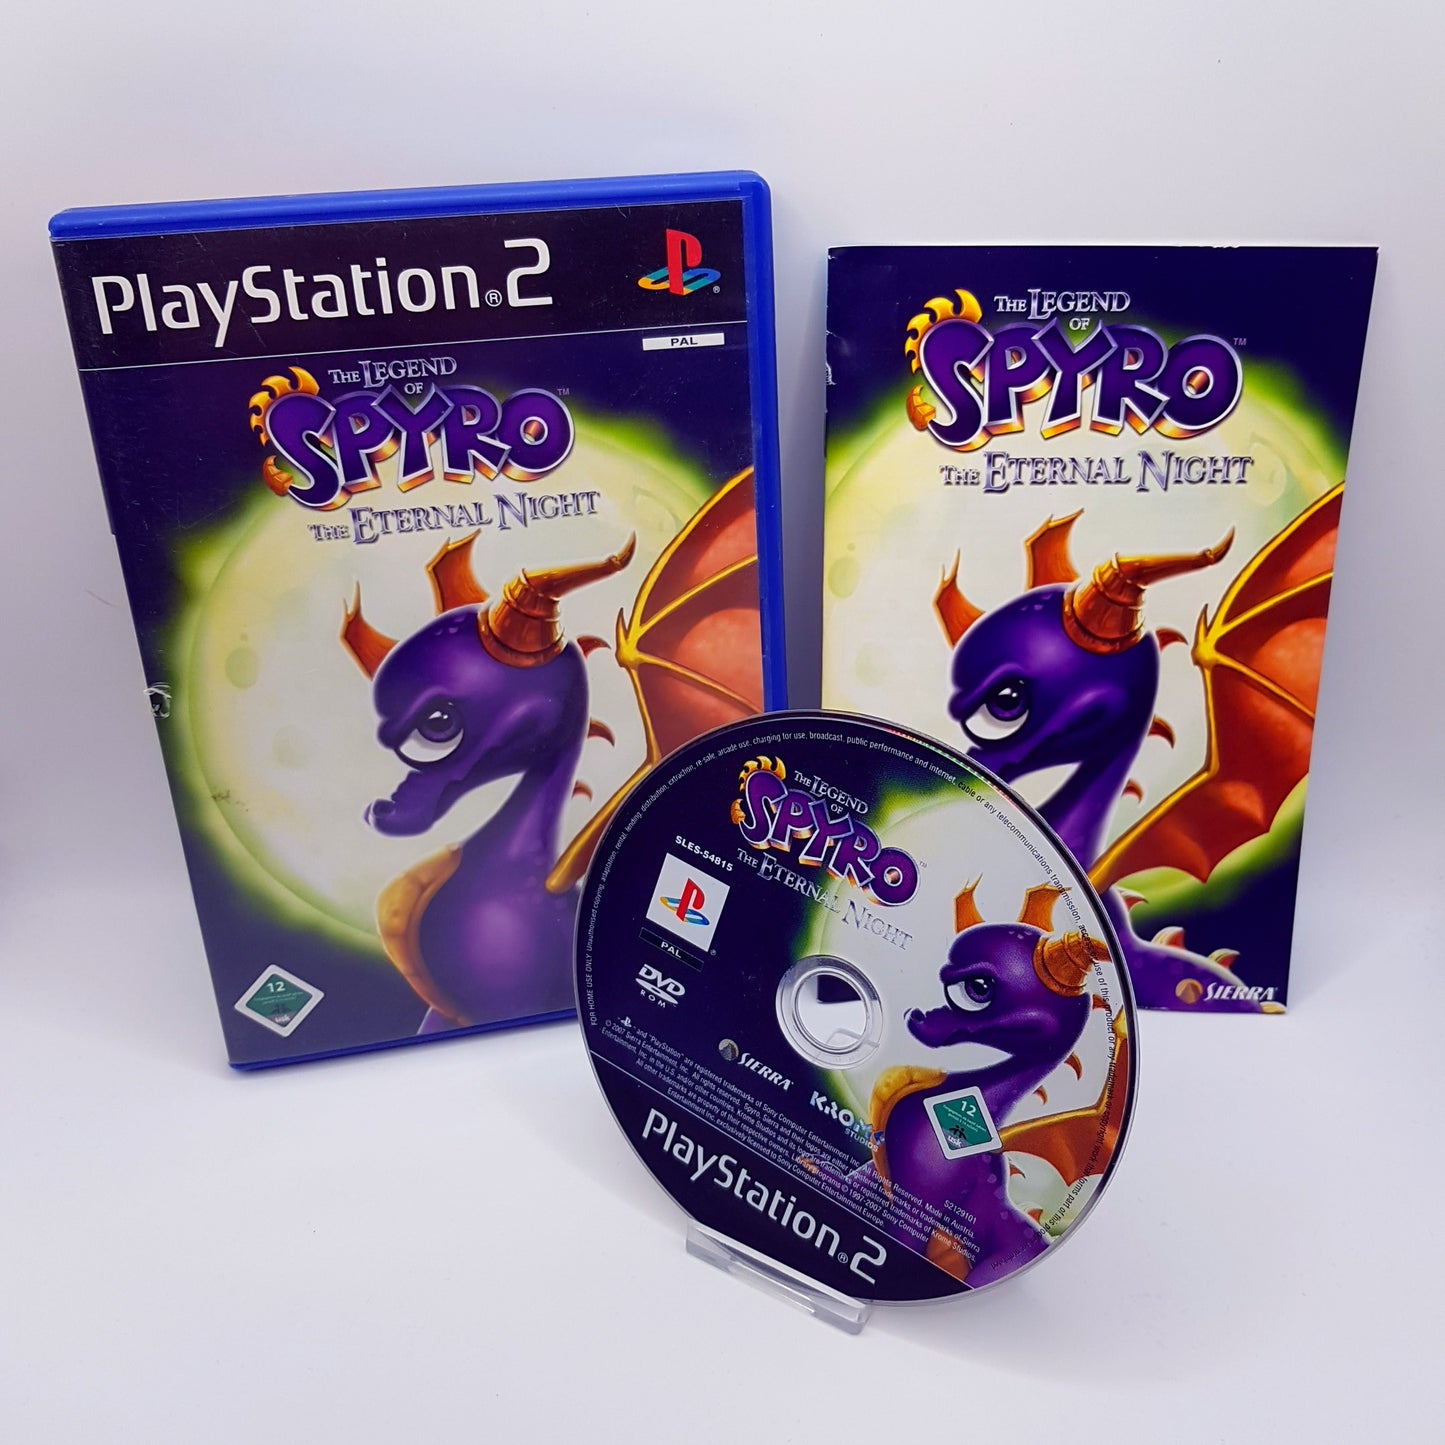 Playstation 2 Ps2 - The Legend of Spyro - The Eternal Night - gebraucht